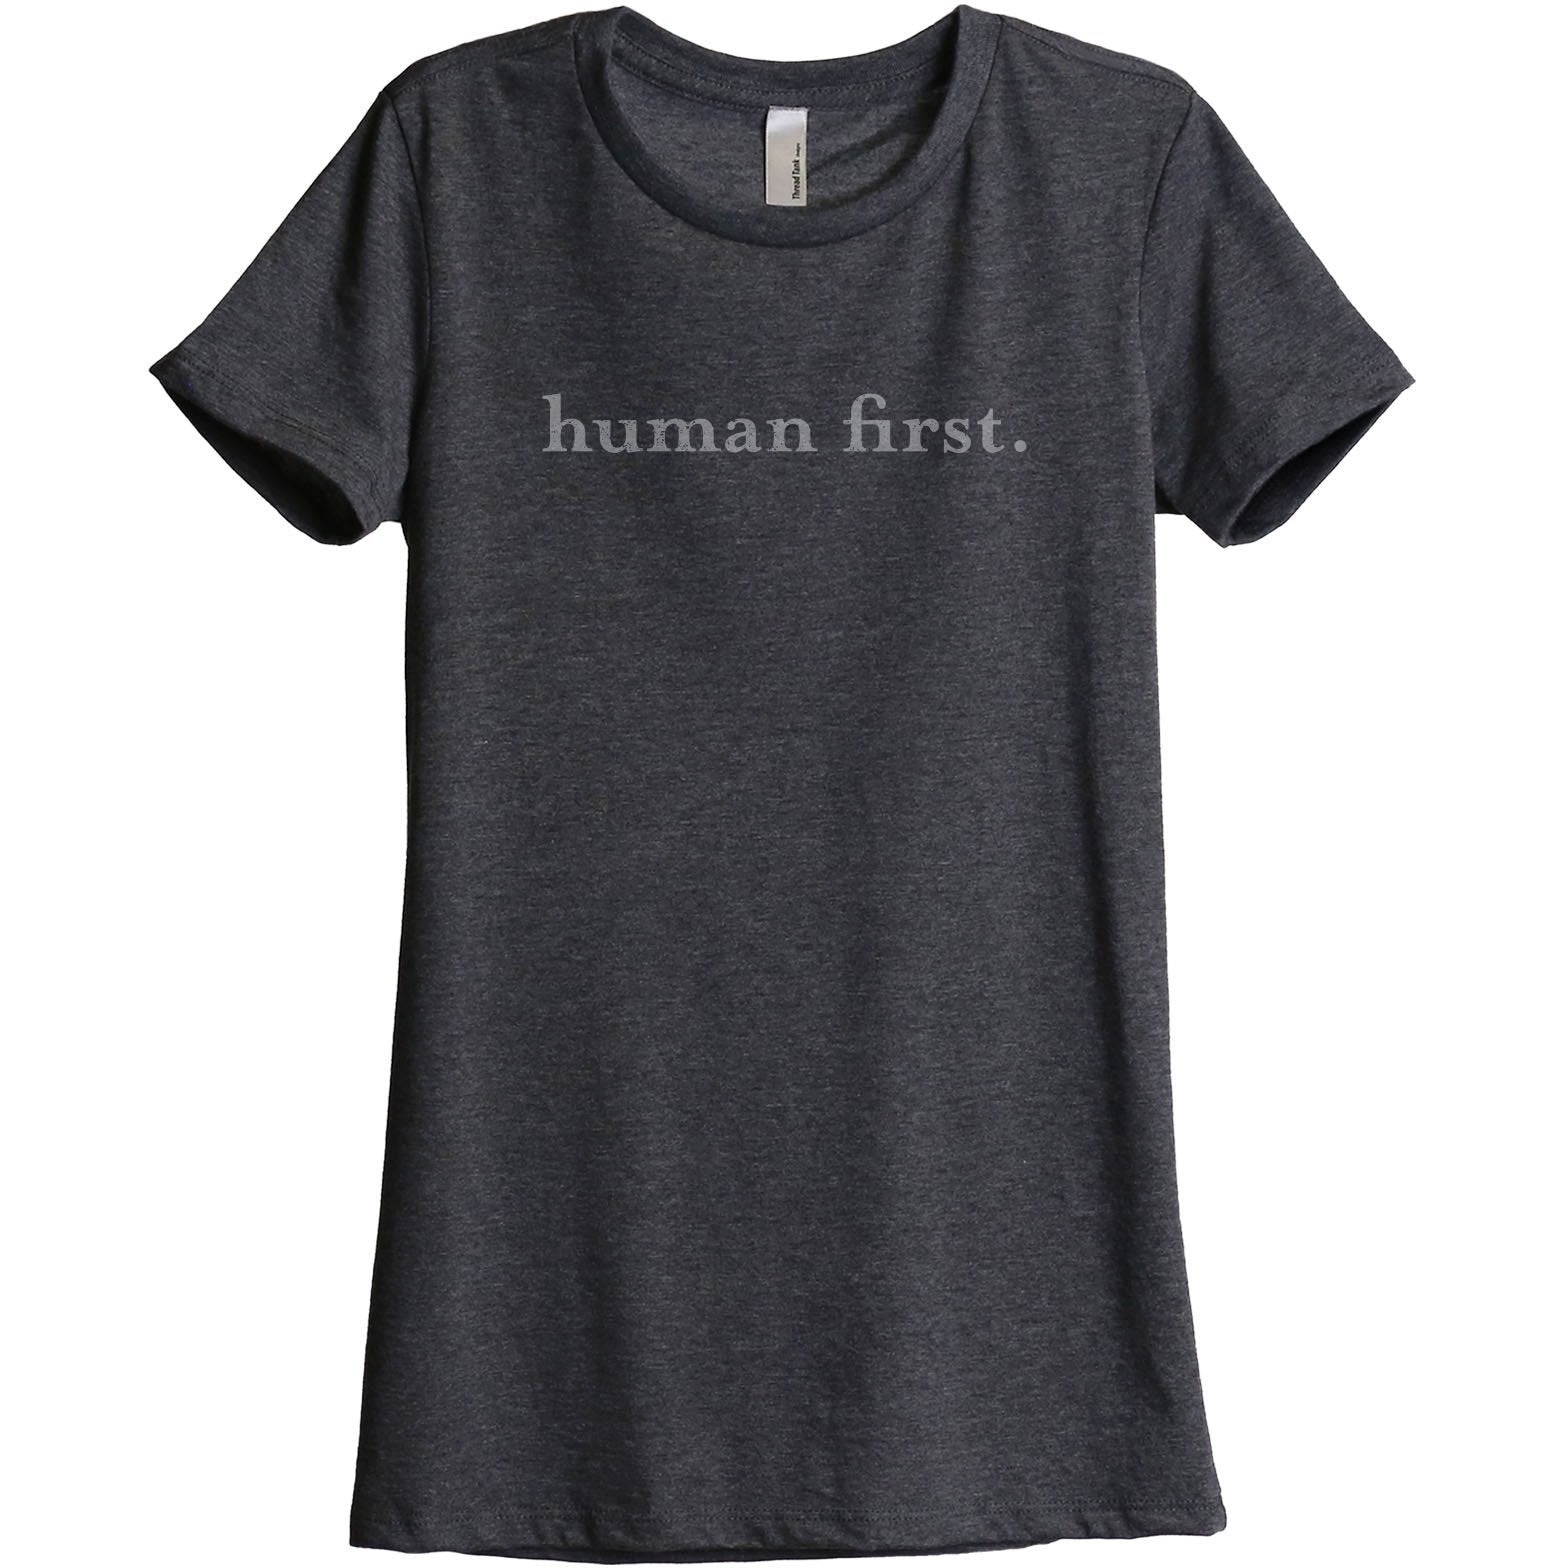 Human First Women's Relaxed Crewneck T-Shirt Top Tee Charcoal Grey
